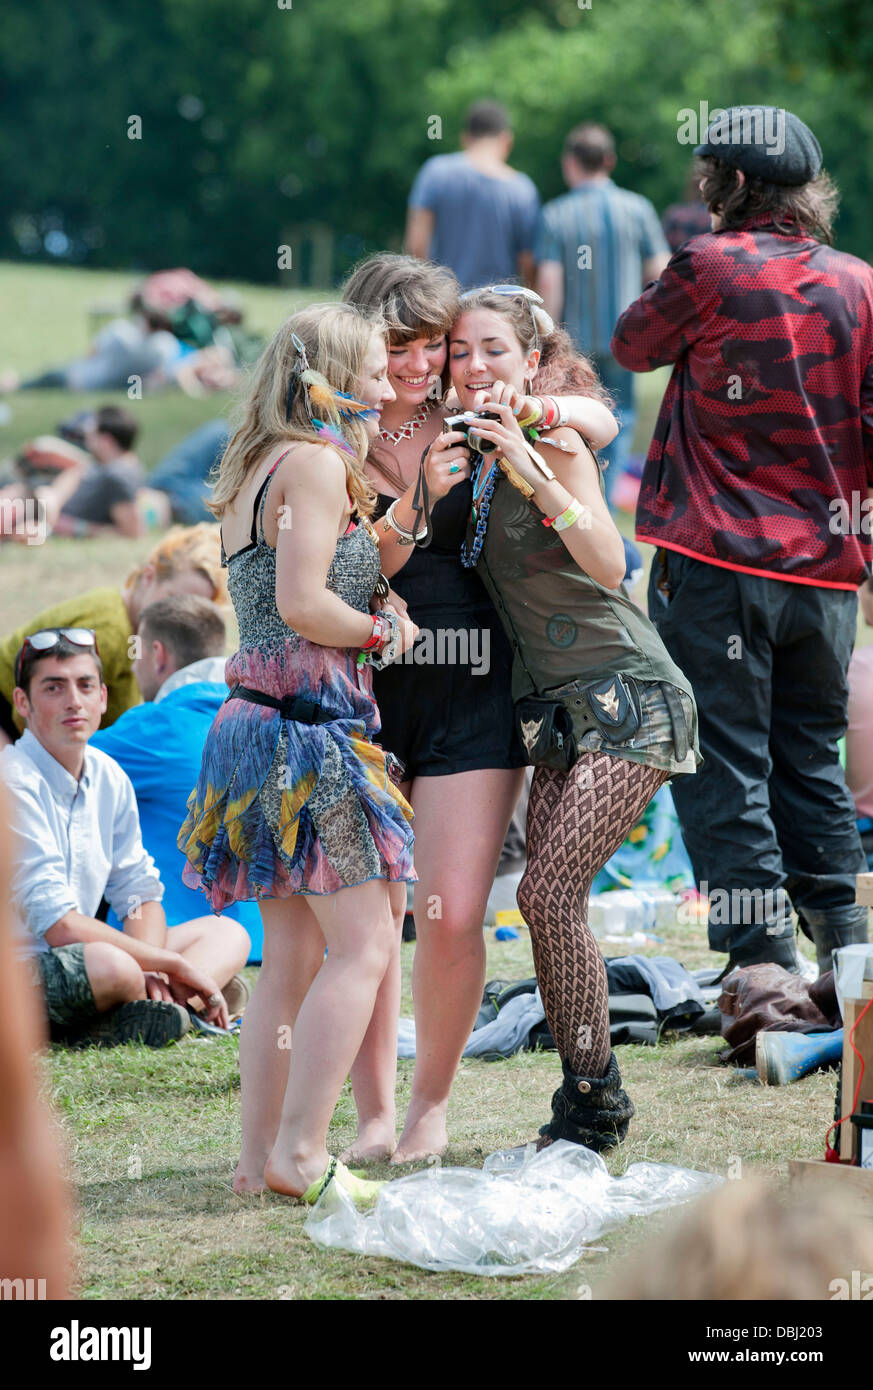 Glastonbury Festival 2013 Uk Three Girls Review A Photograph Near The 